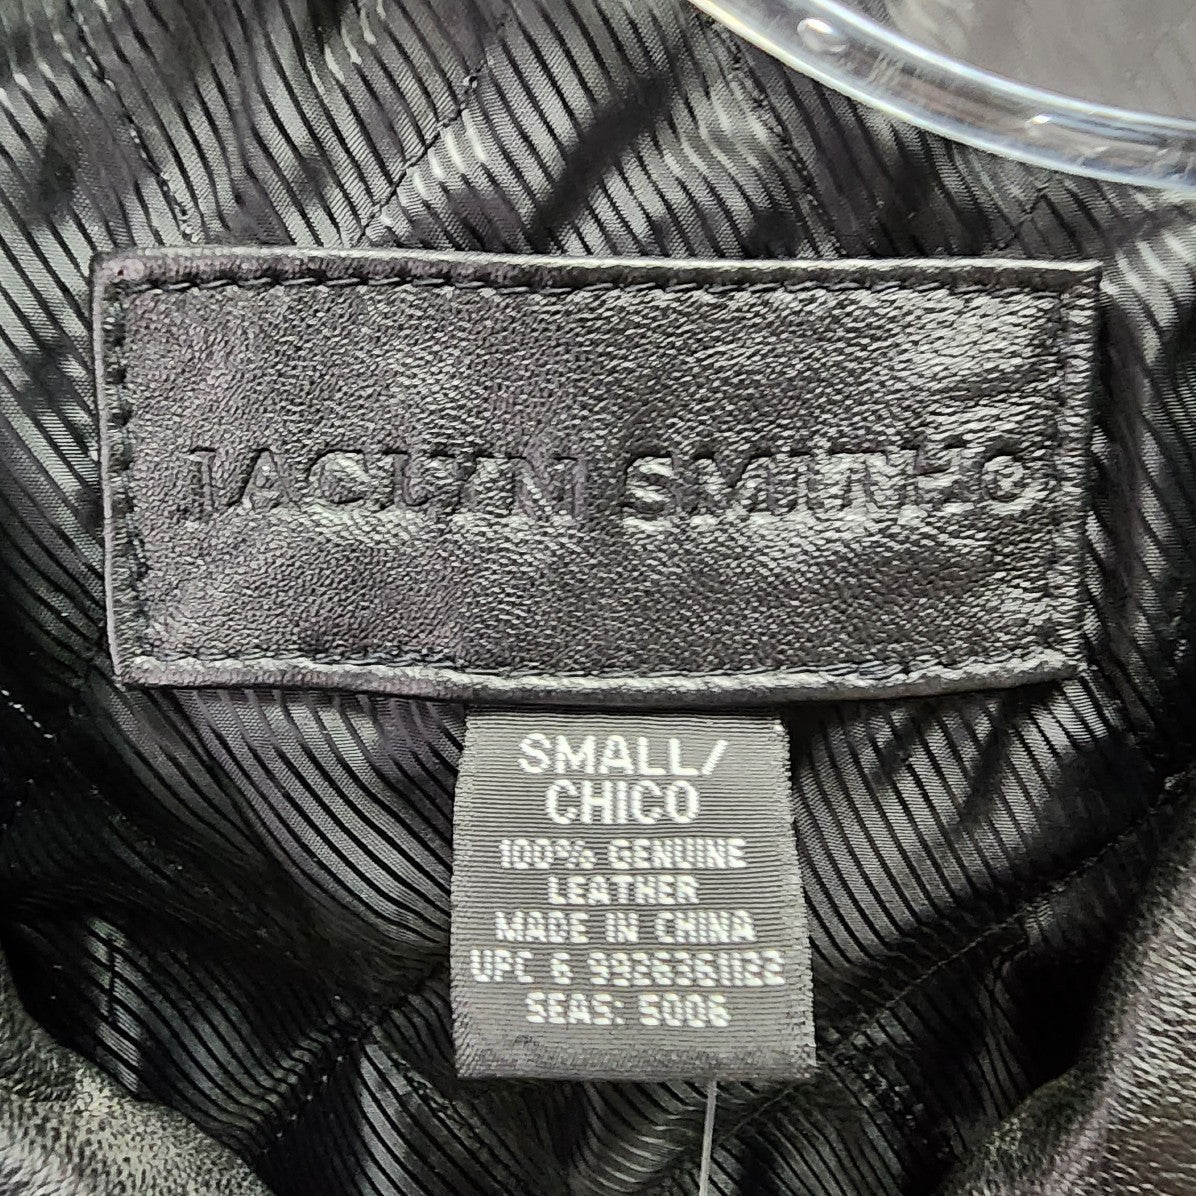 Jaclyn Smith Black Leather Zip Up Jacket Size S